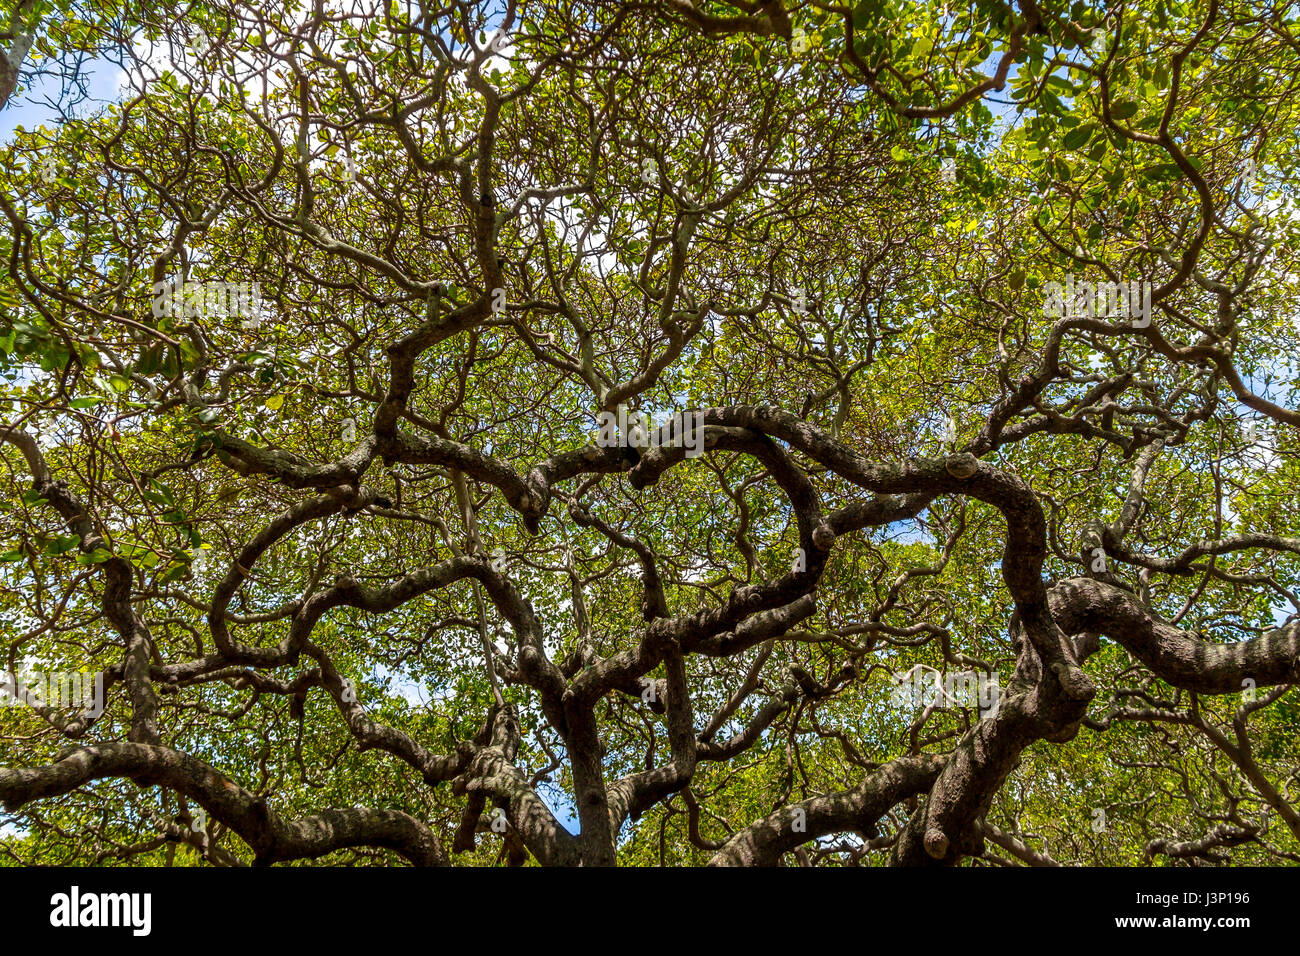 World's Largest Cashew Tree - Pirangi, Rio Grande do Norte, Brazil Stock Photo